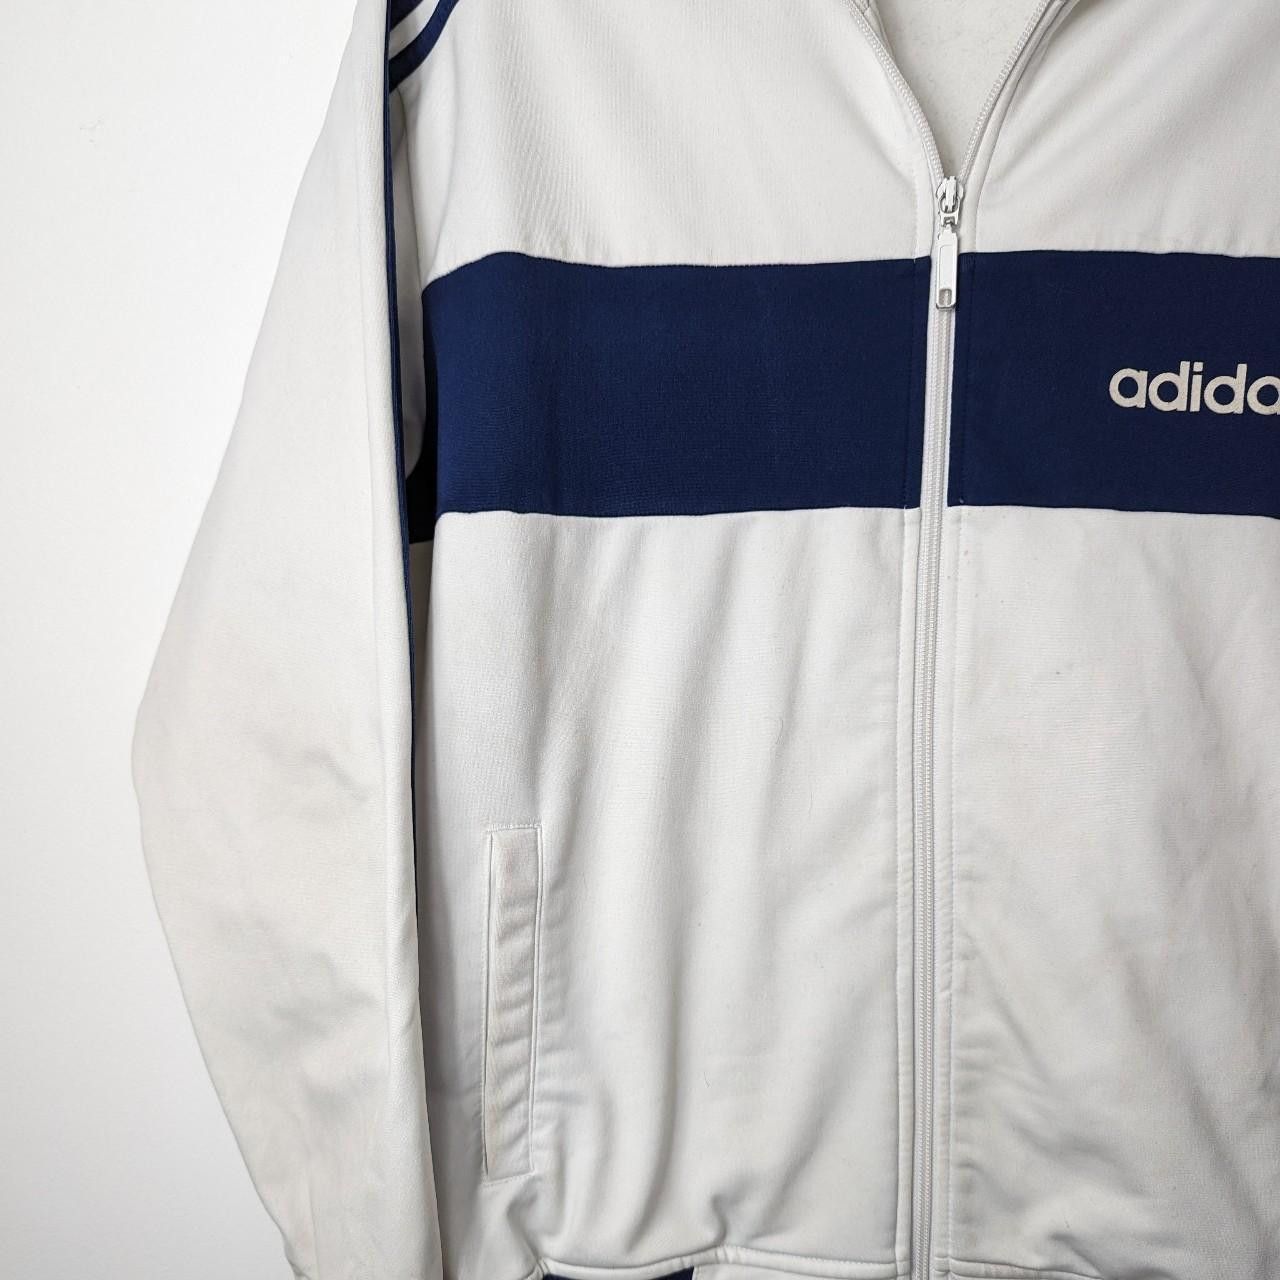 Adidas Vintage Adidas y2k Track top Track suit Sweatshirt Size US M / EU 48-50 / 2 - 3 Thumbnail